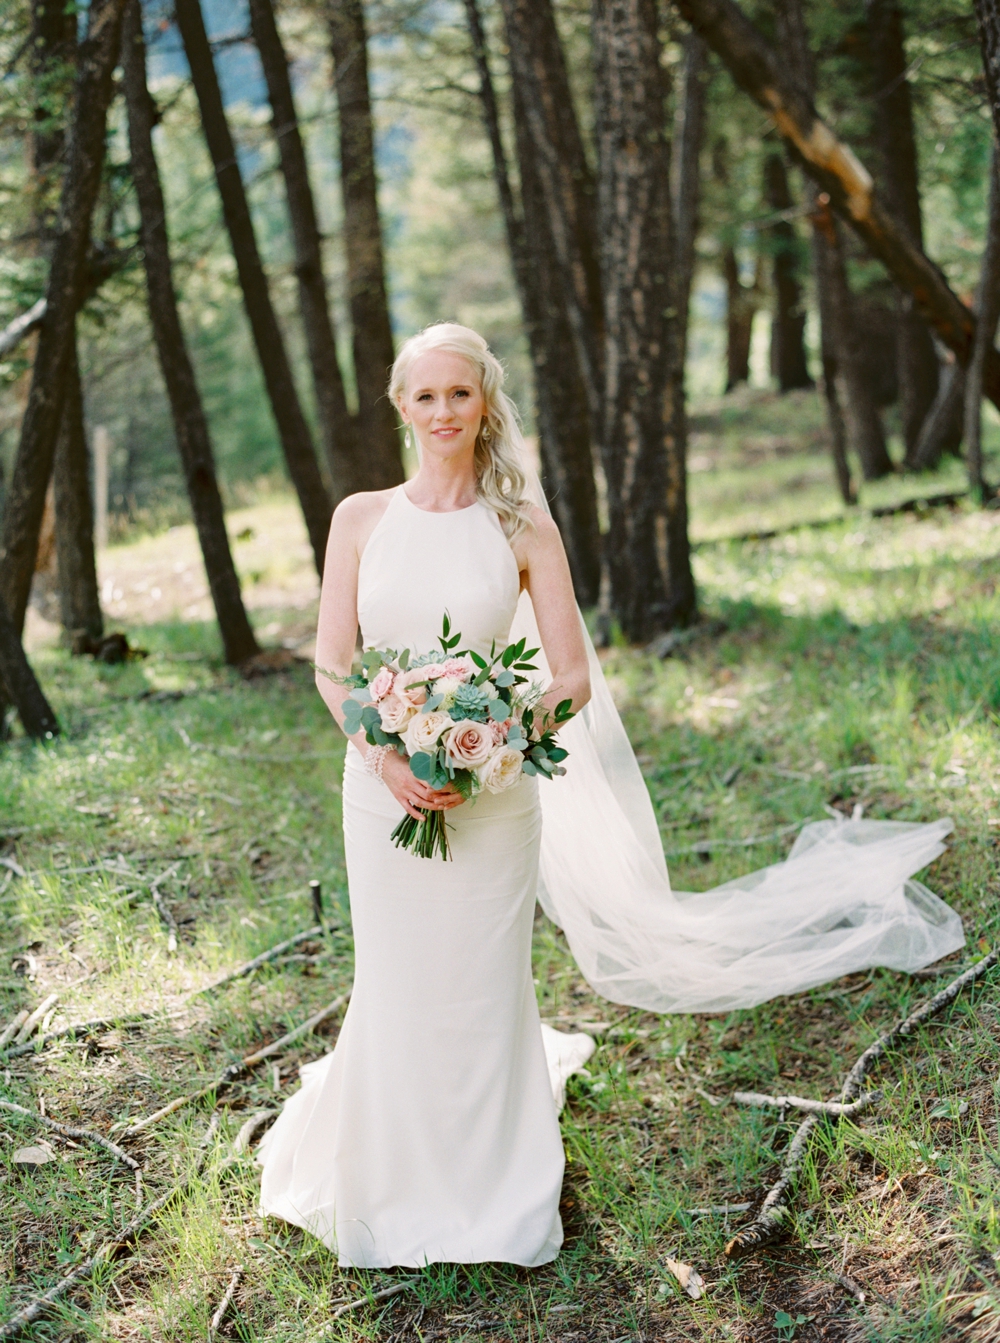 Banff Springs Hotel Wedding | Calgary Wedding Photographers | Banff Wedding Photography | Destination Wedding | Mountain Weddings